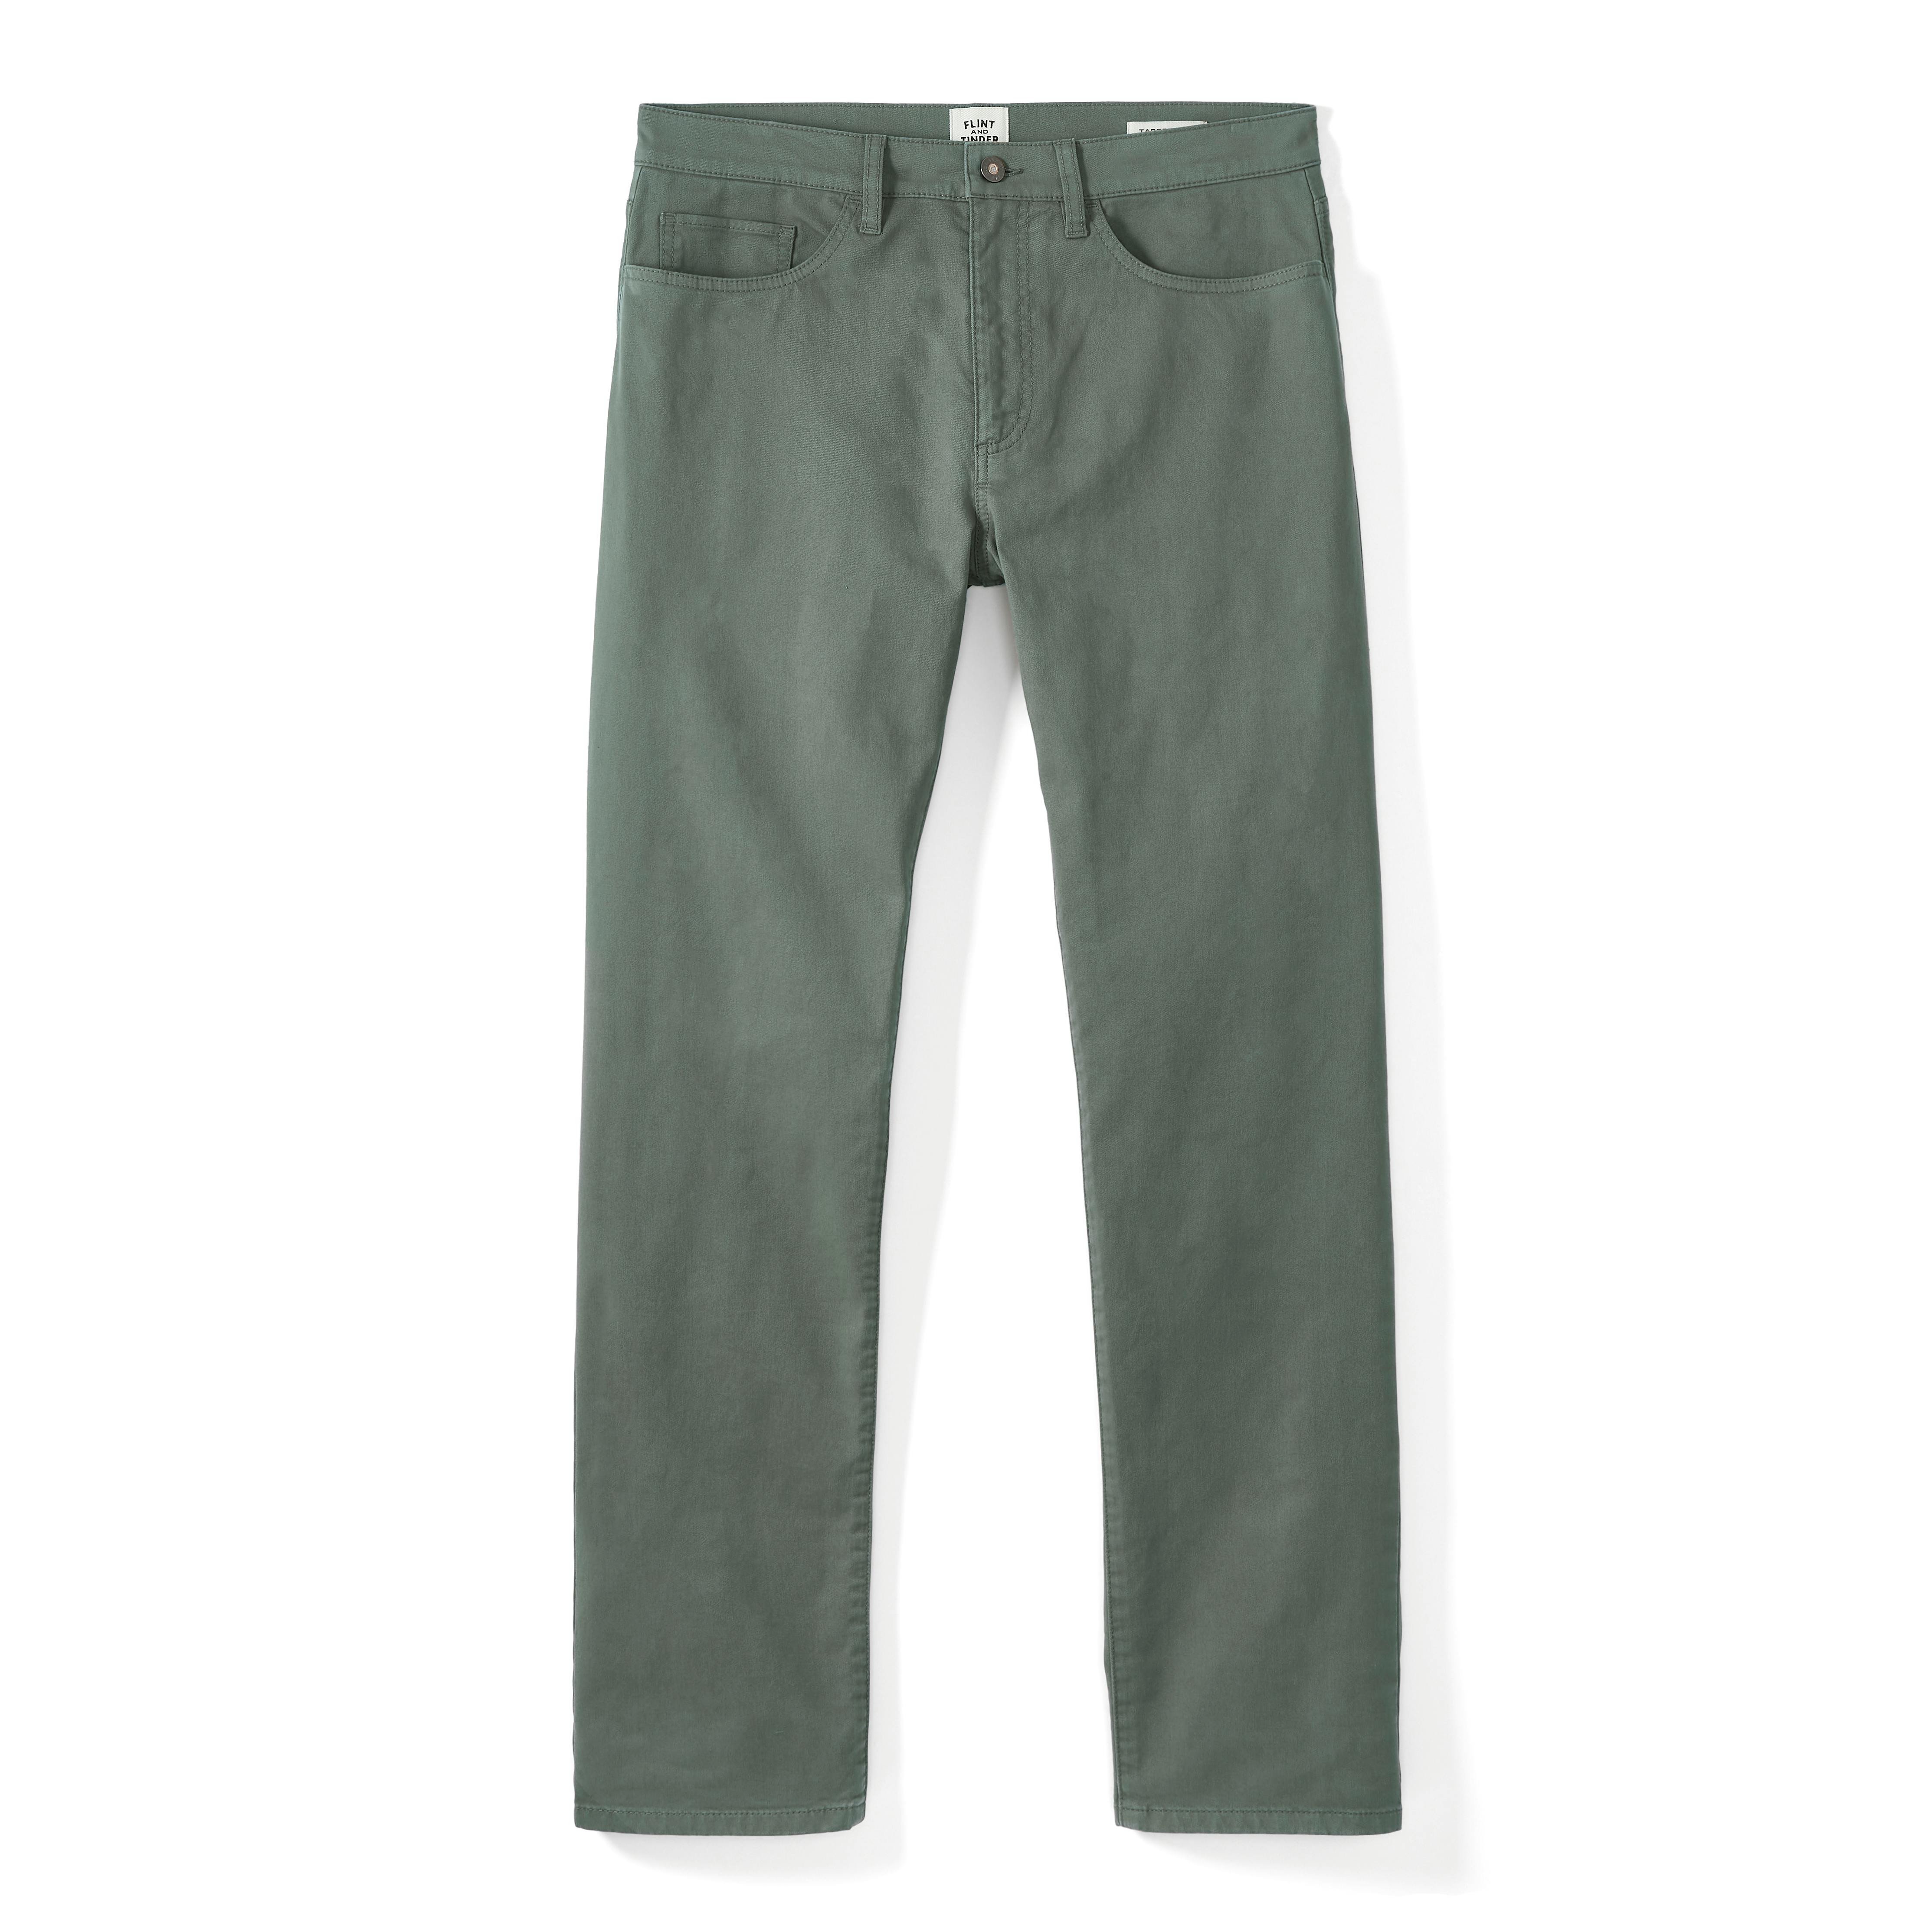 TLF Green Active Pants Size XL - 71% off